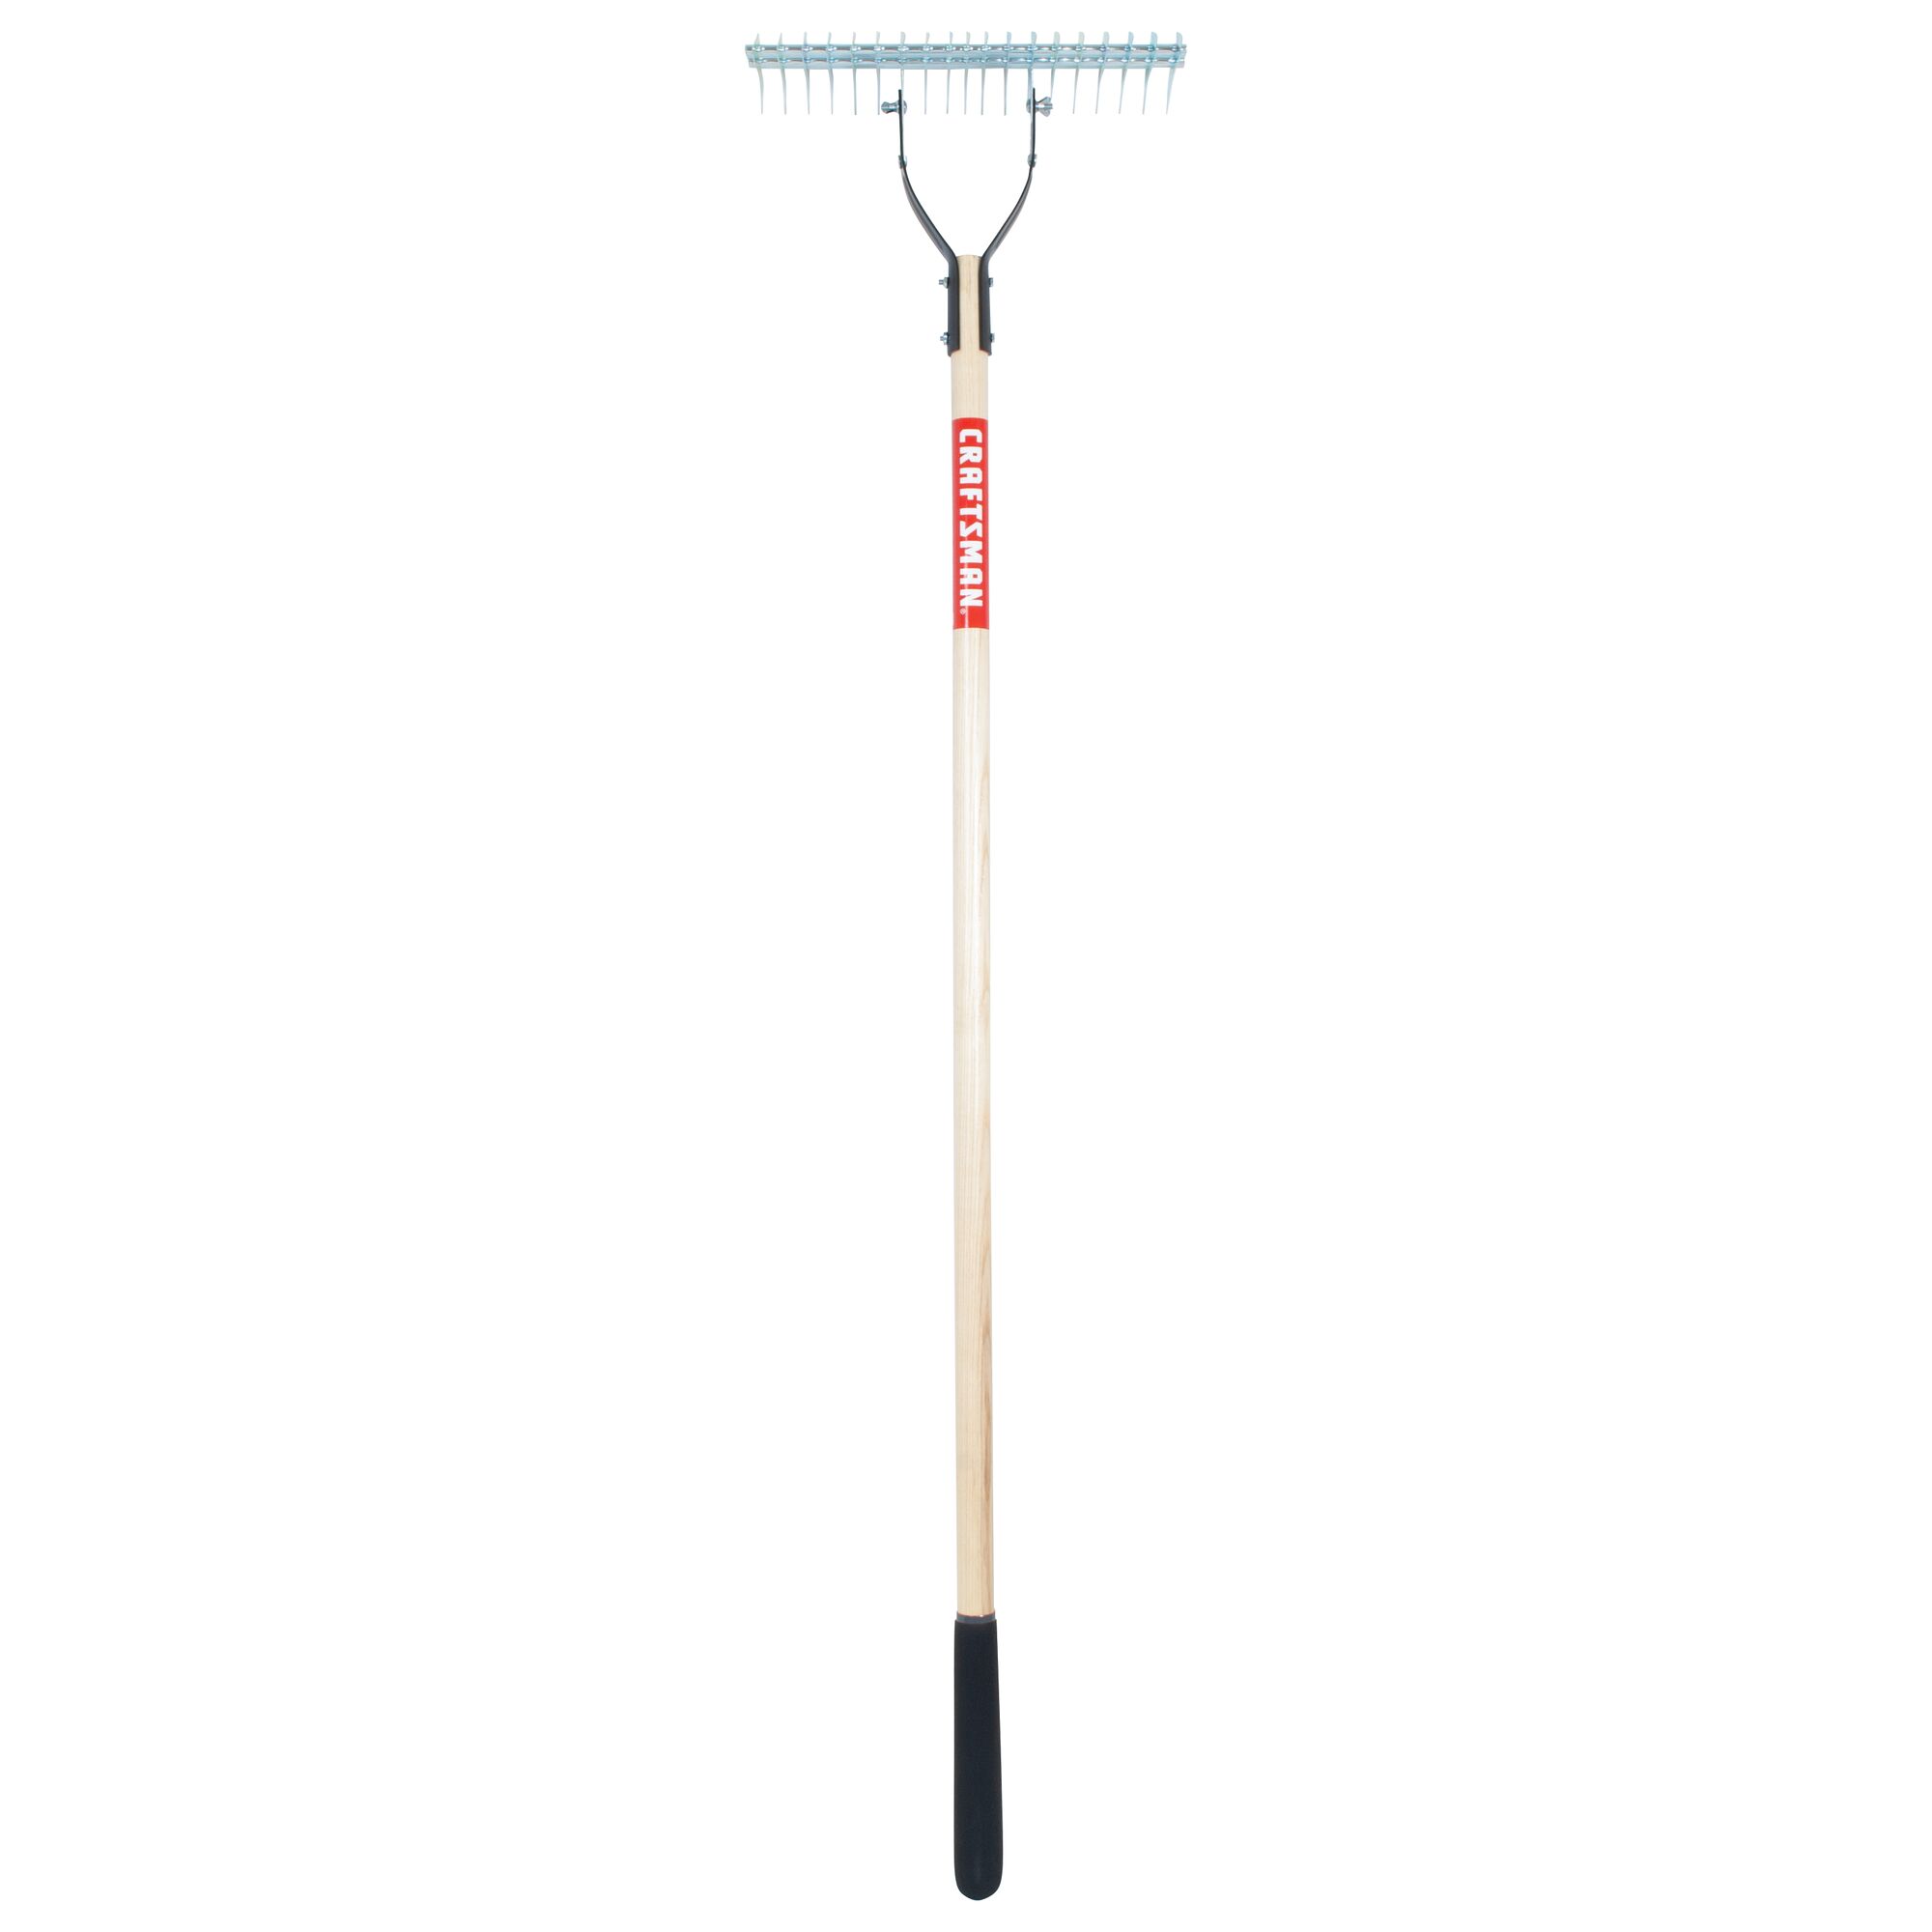 Profile of wood handle thatching rake.